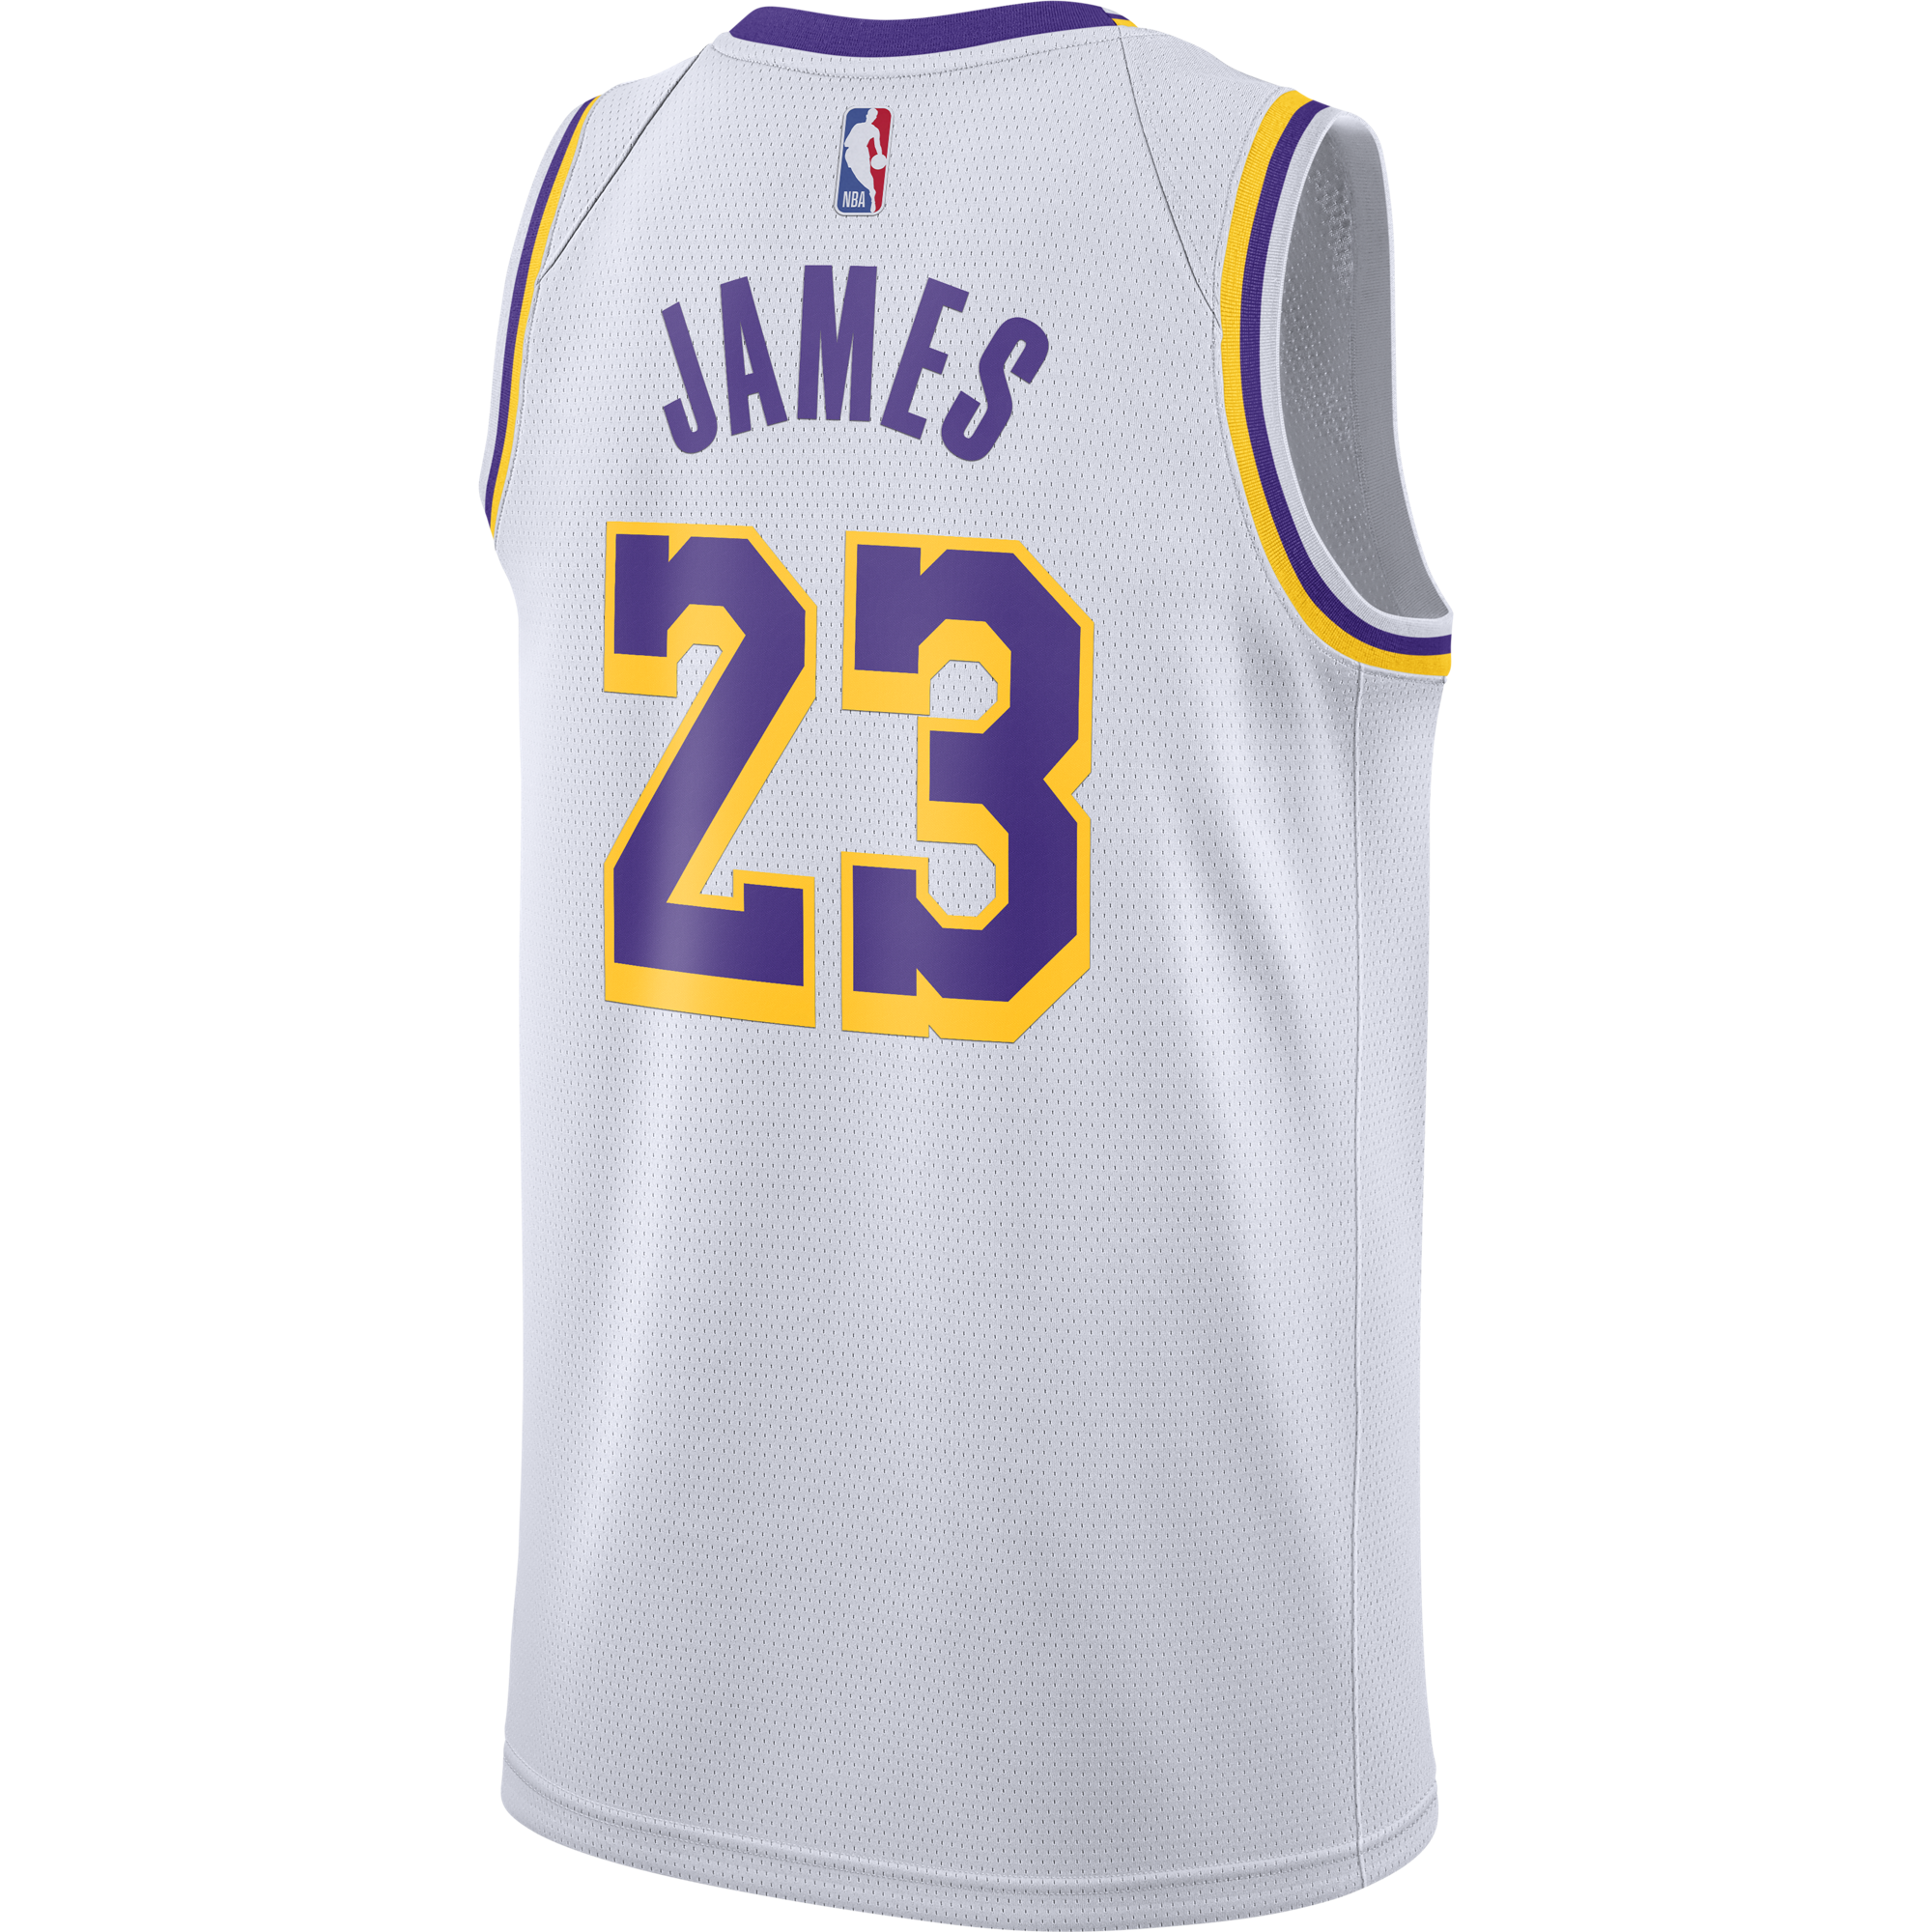 La Lakers LeBron James Basketball Trikot(L/M)2020 Edition in